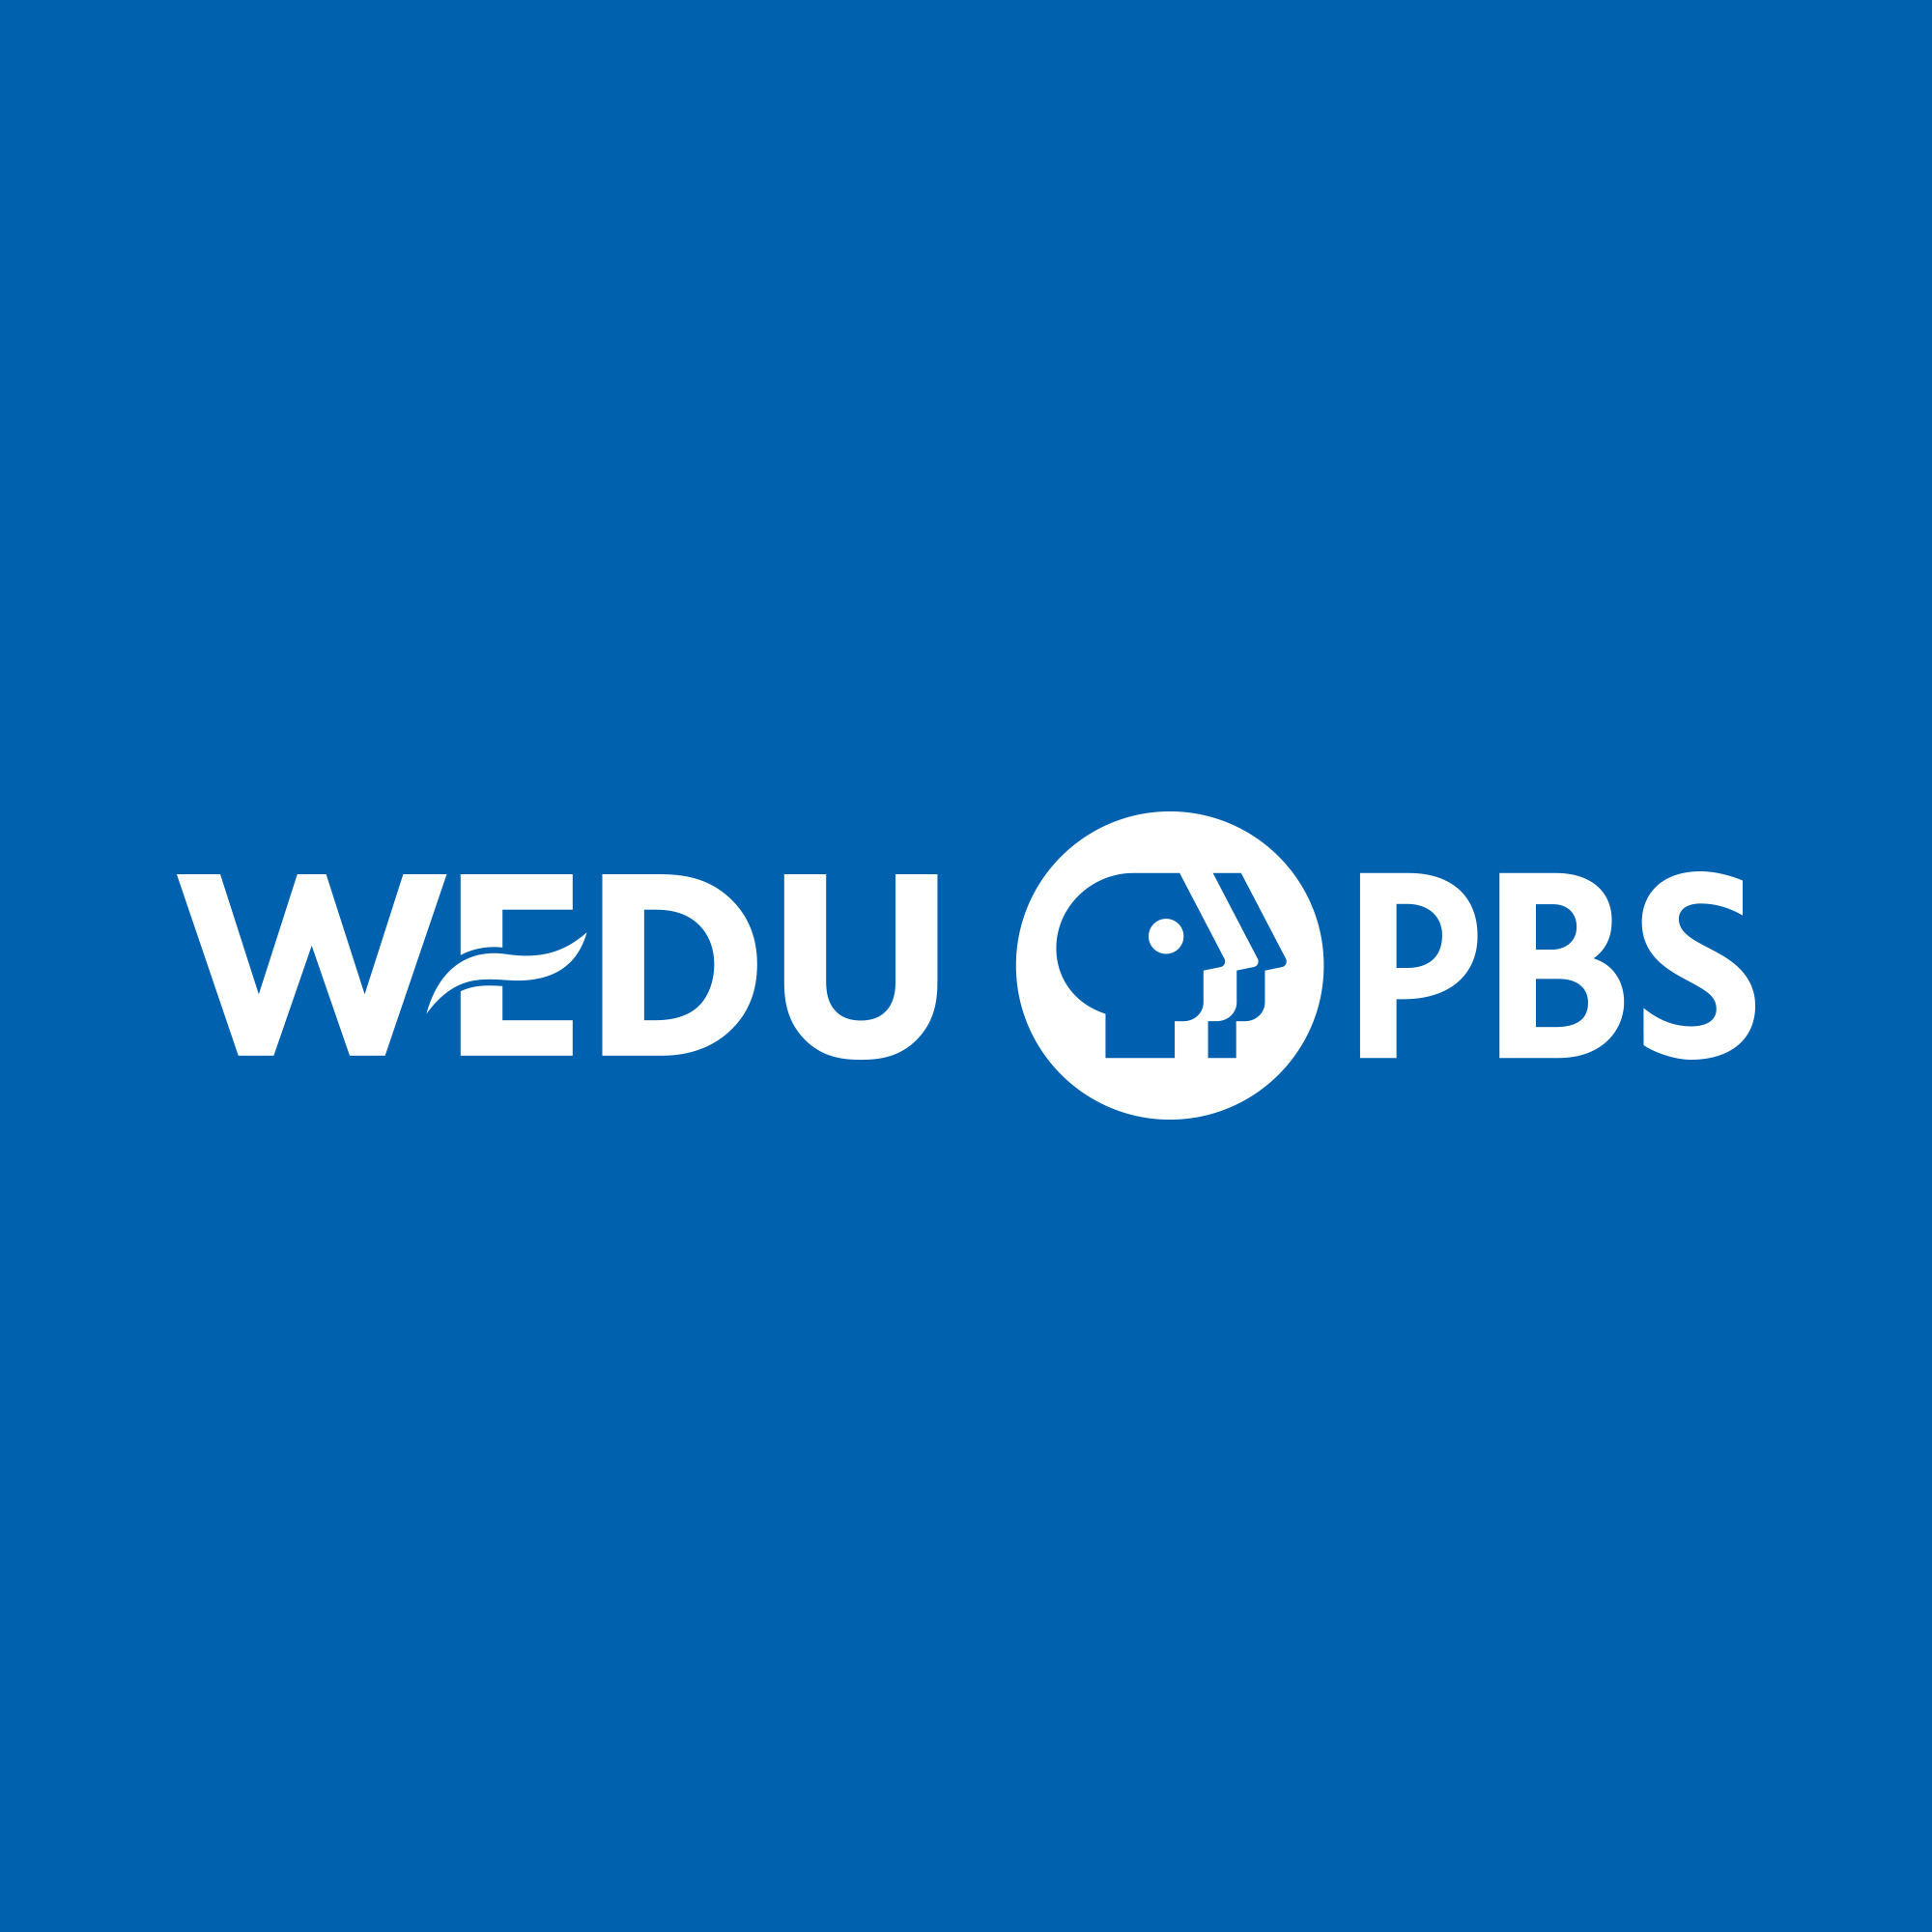 WEDU PBS Rebrand